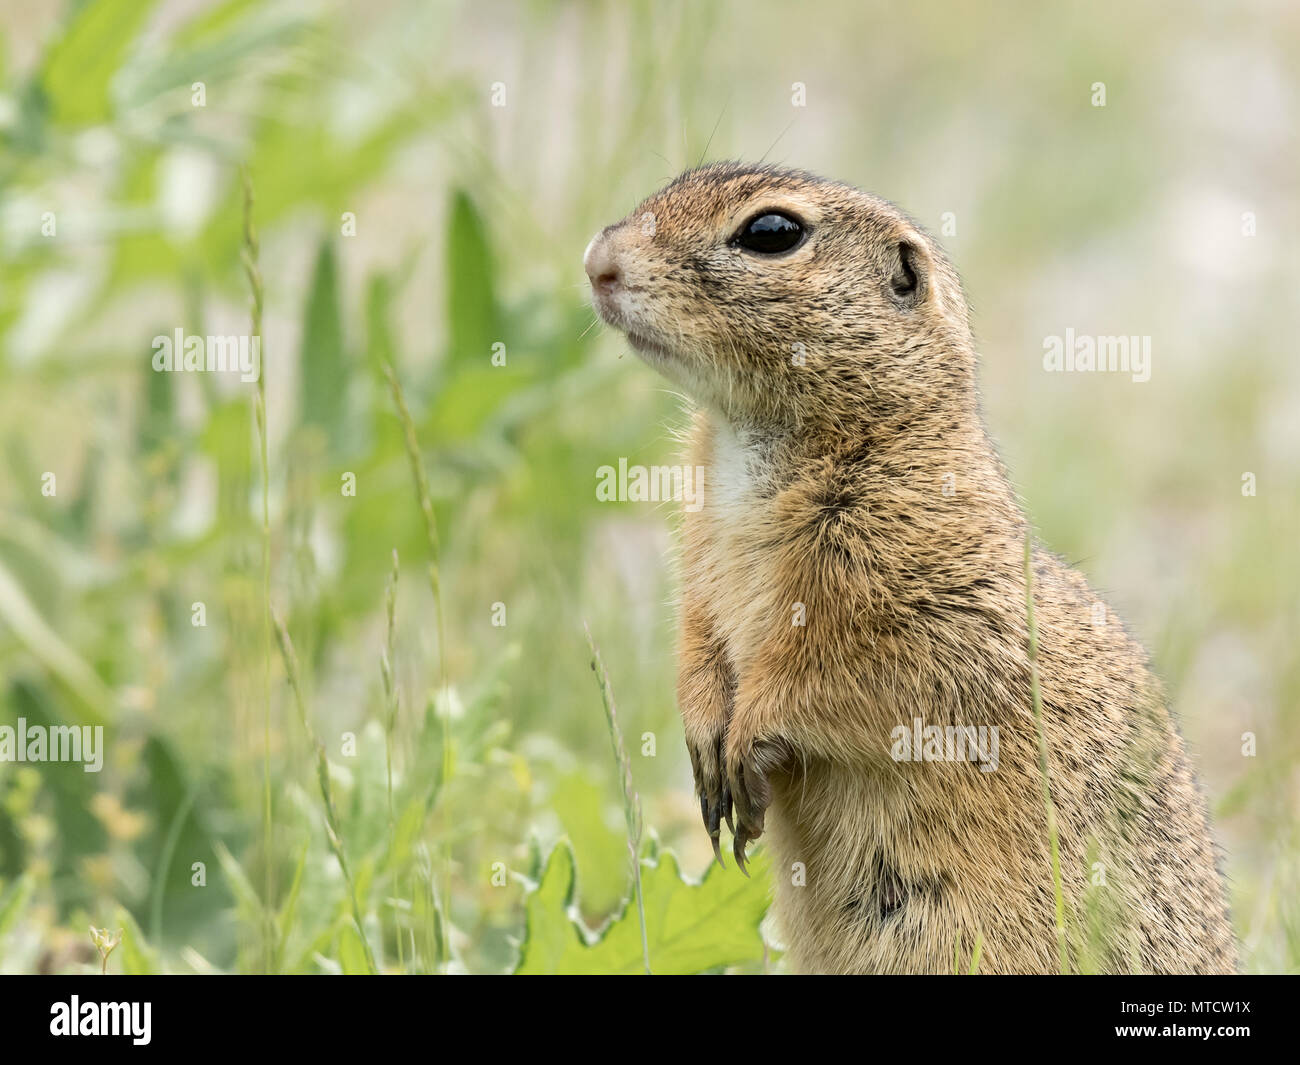 A European ground squirrel (Spermophilus citellus) standing in a green meadow in spring (Austria) Stock Photo